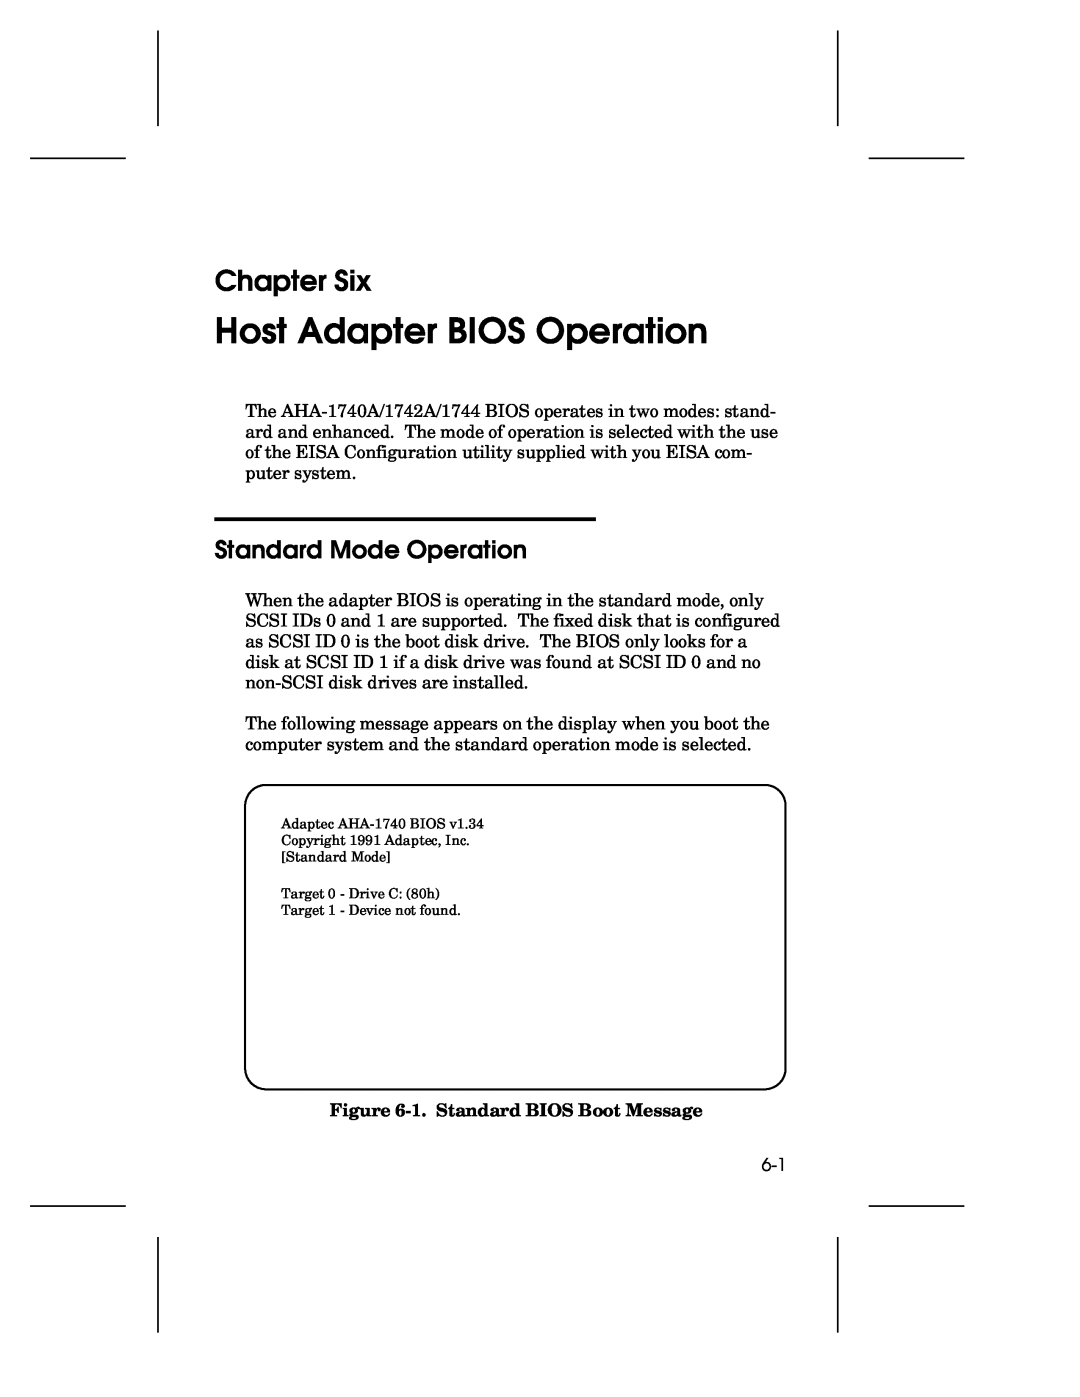 Adaptec 1744, AHA-1740A Host Adapter BIOS Operation, Chapter Six, Standard Mode Operation, 1. Standard BIOS Boot Message 